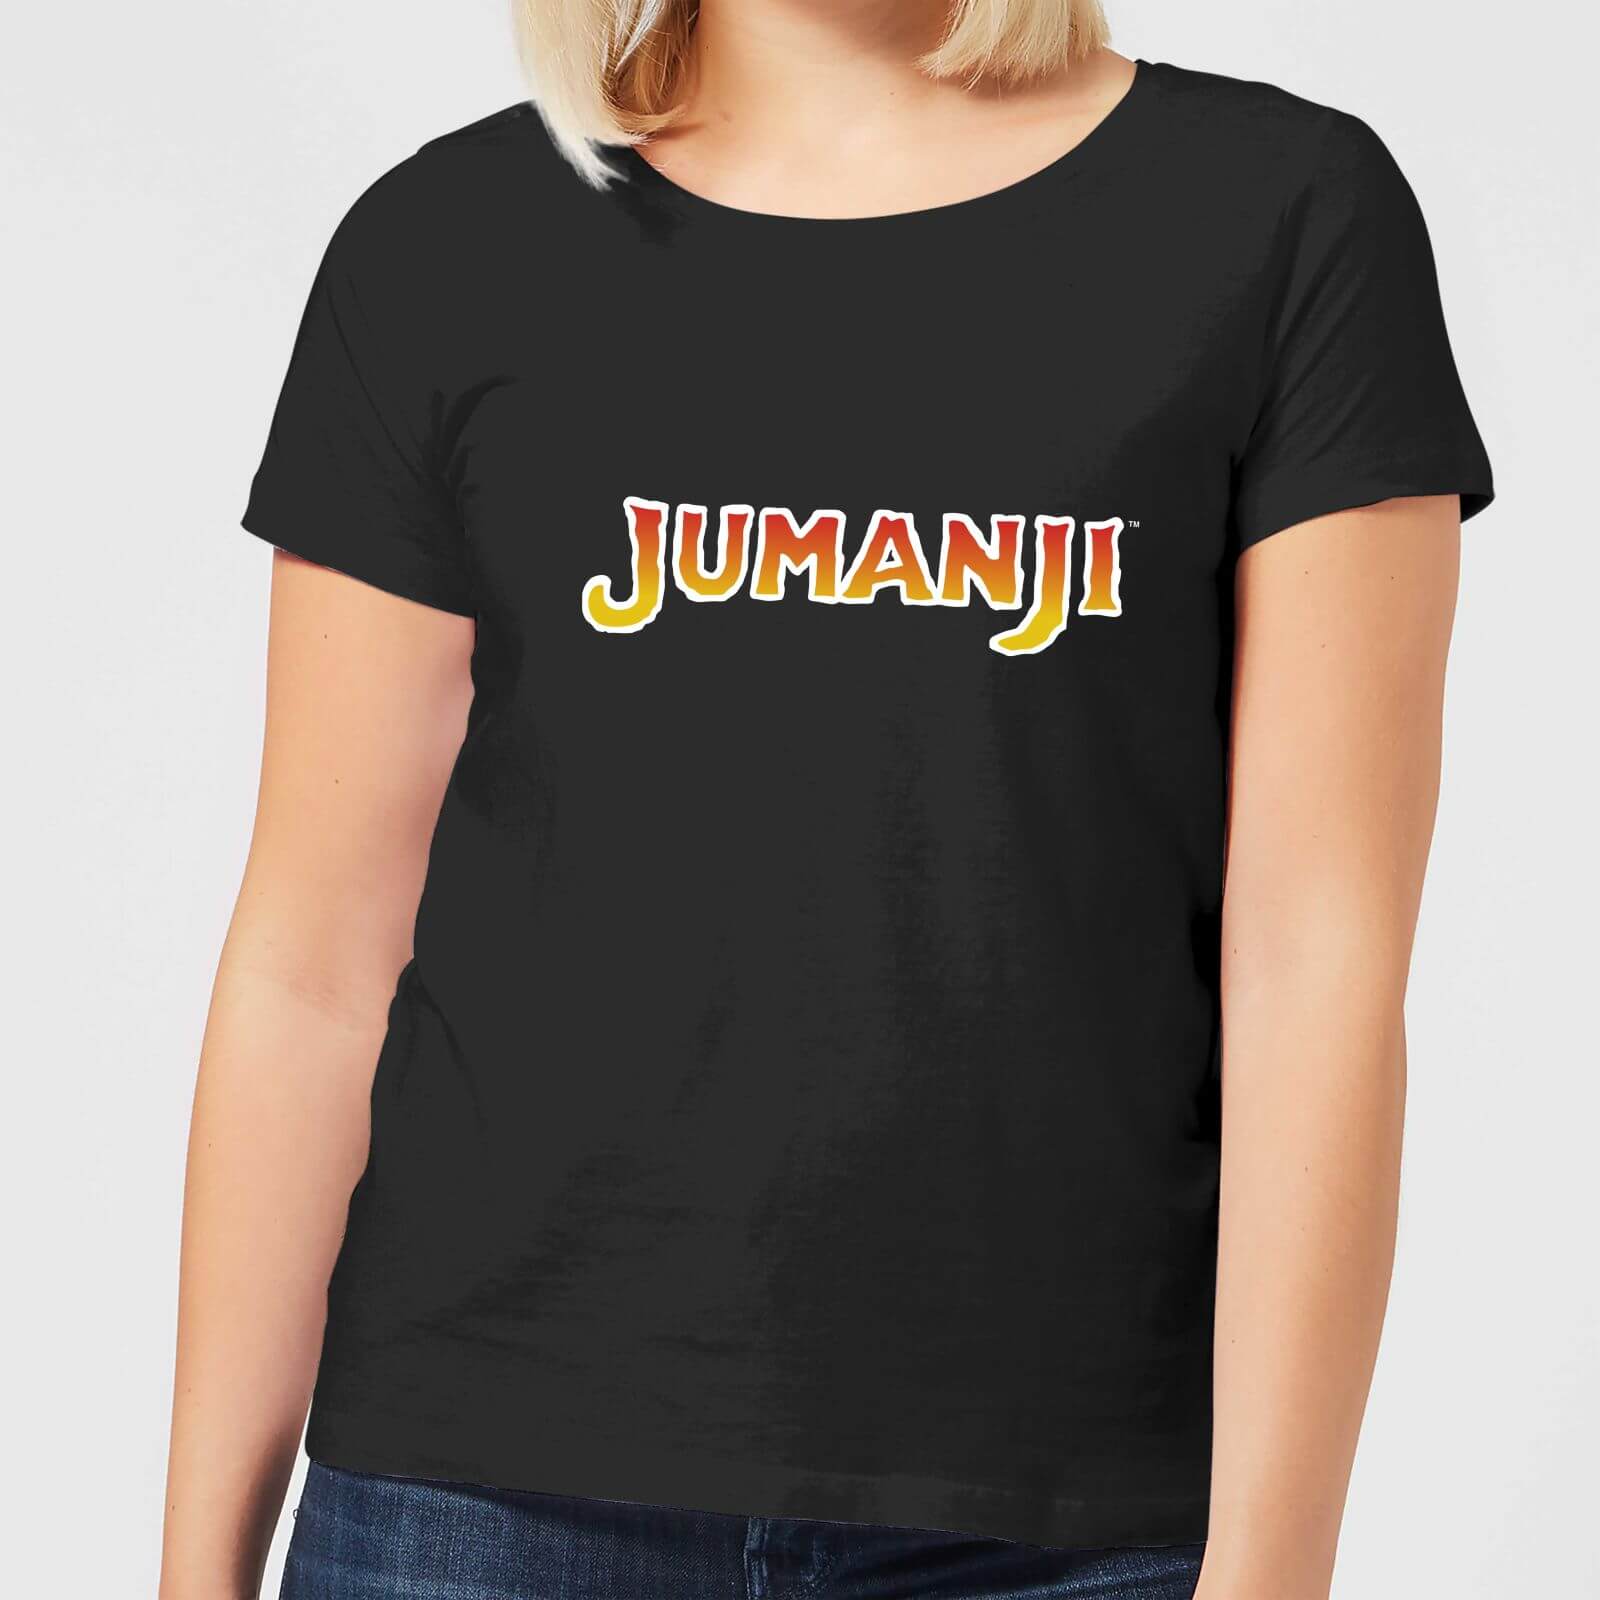 Jumanji Logo Women's T-Shirt - Black - 4XL